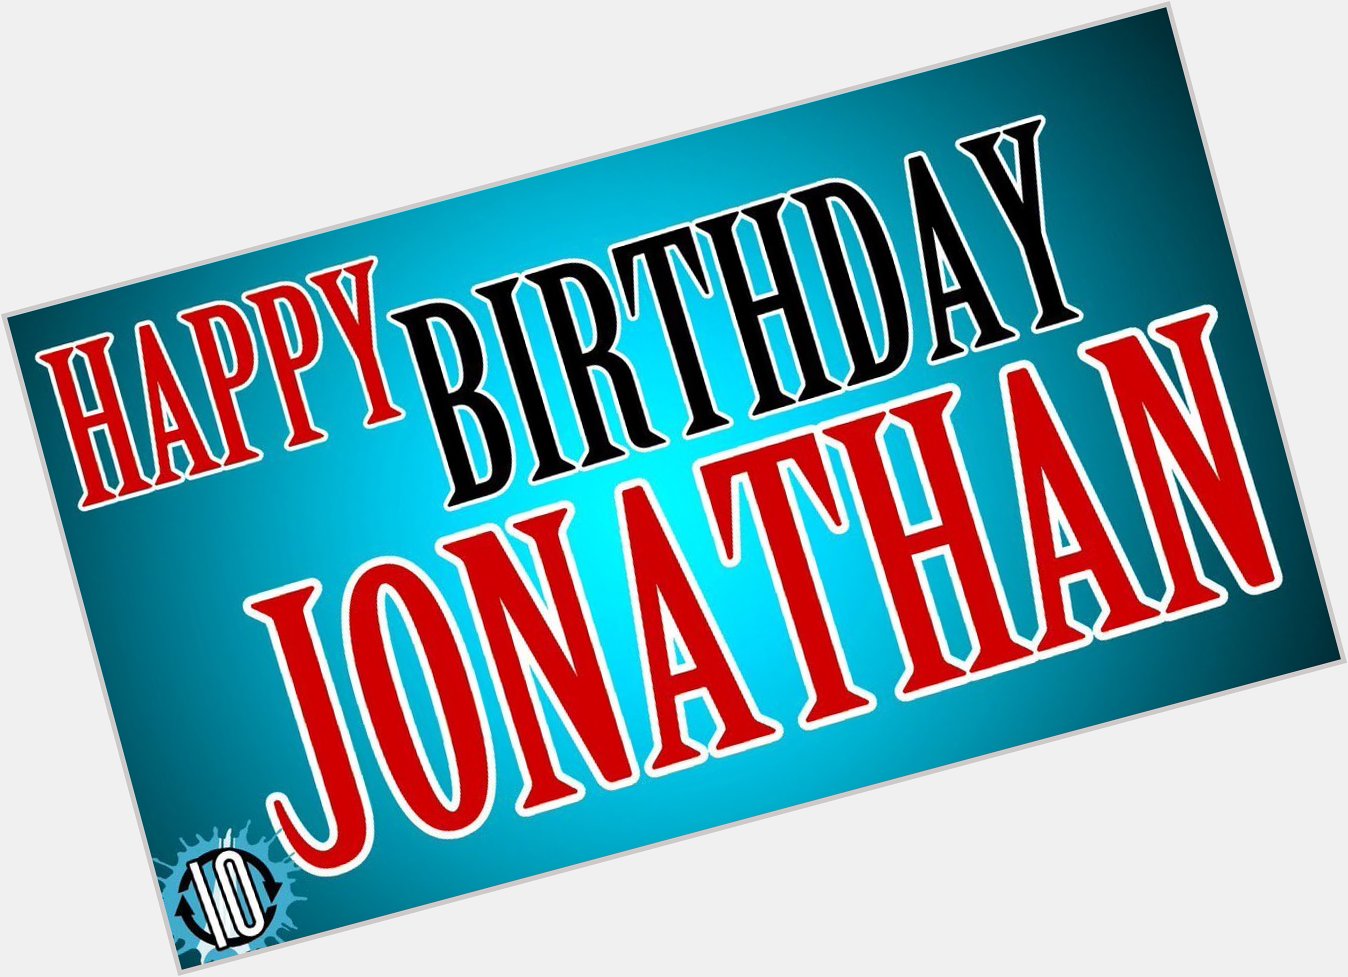 Happy birthday Jonathan Knight 